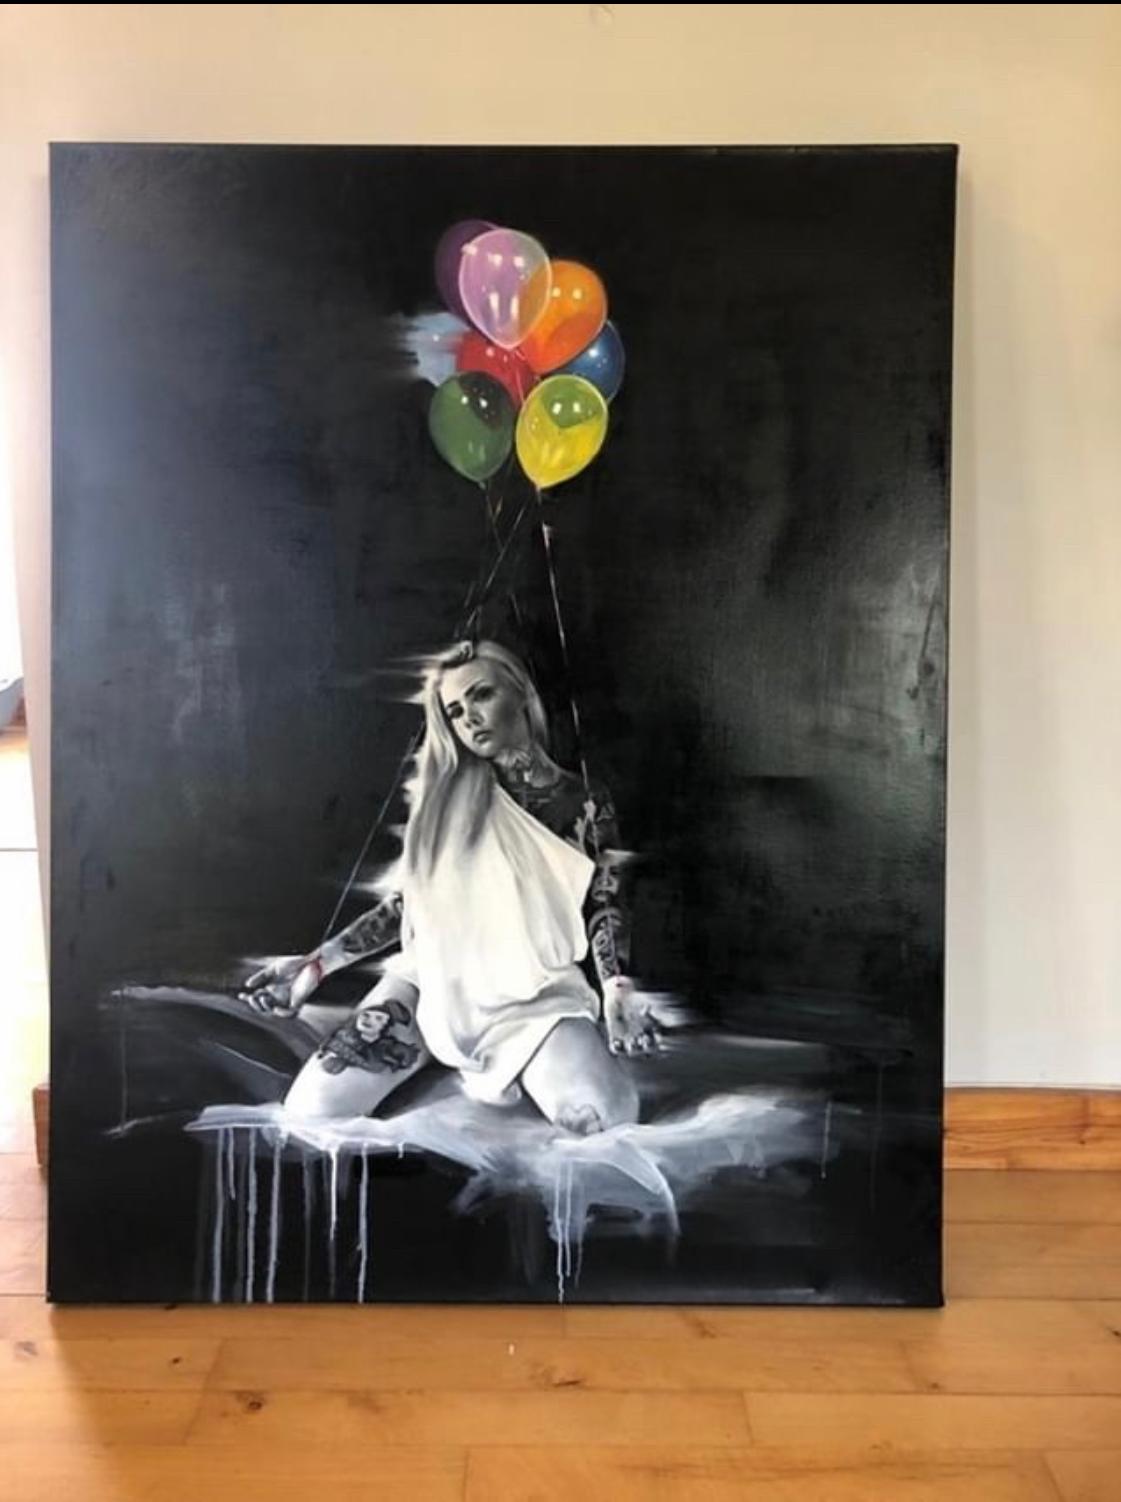 Lucid
2019
Oil on canvas
43